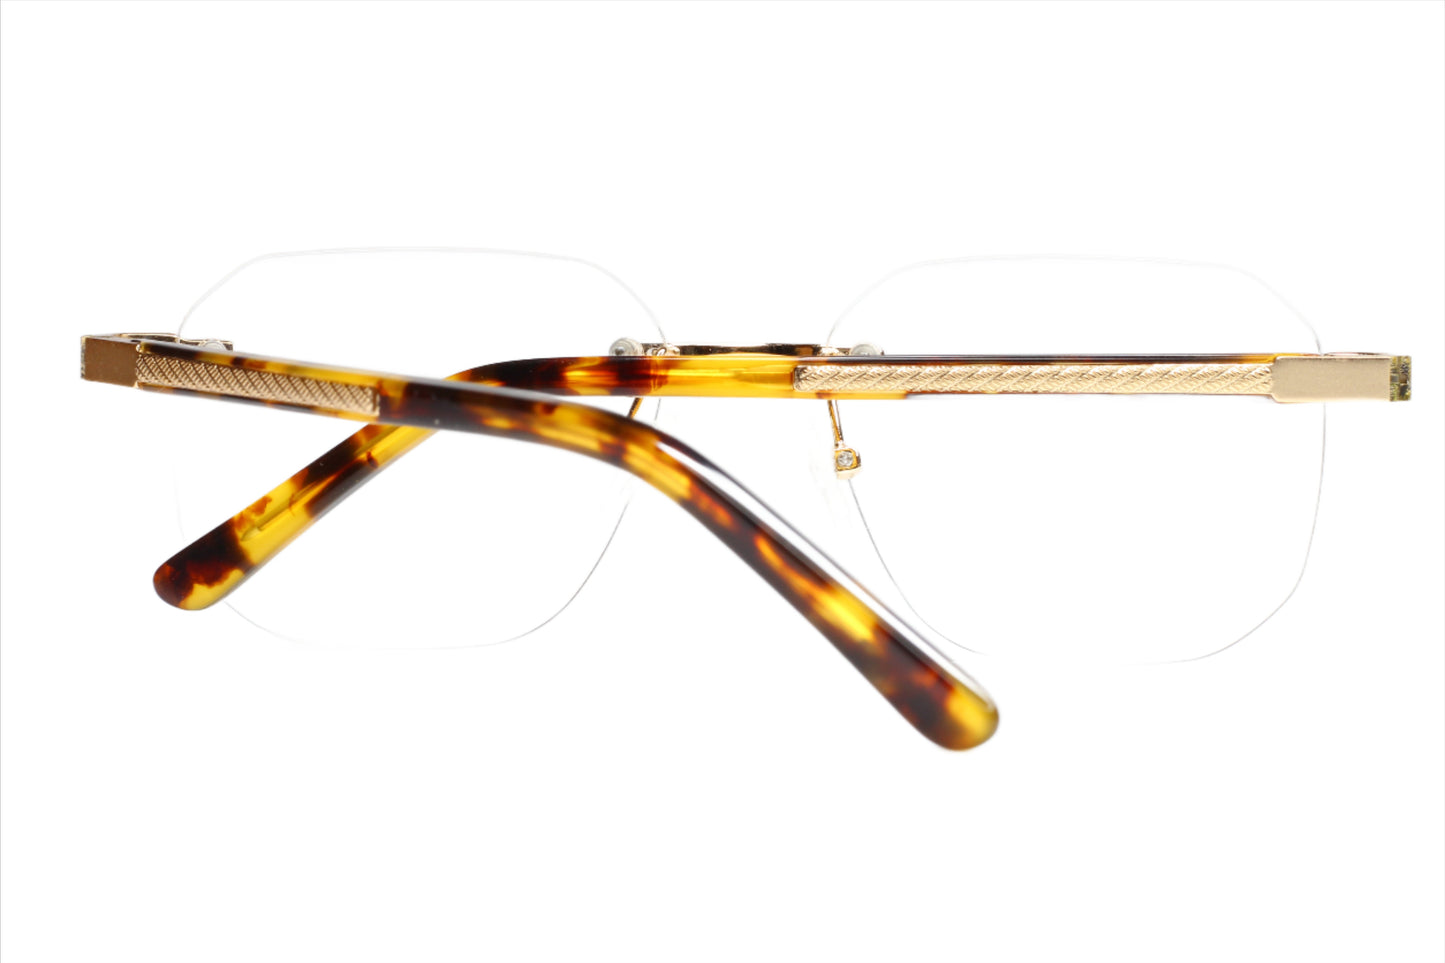 Myriad Eyewear ME25610 Tortoise Gold Rimless Luxury Eyeglasses